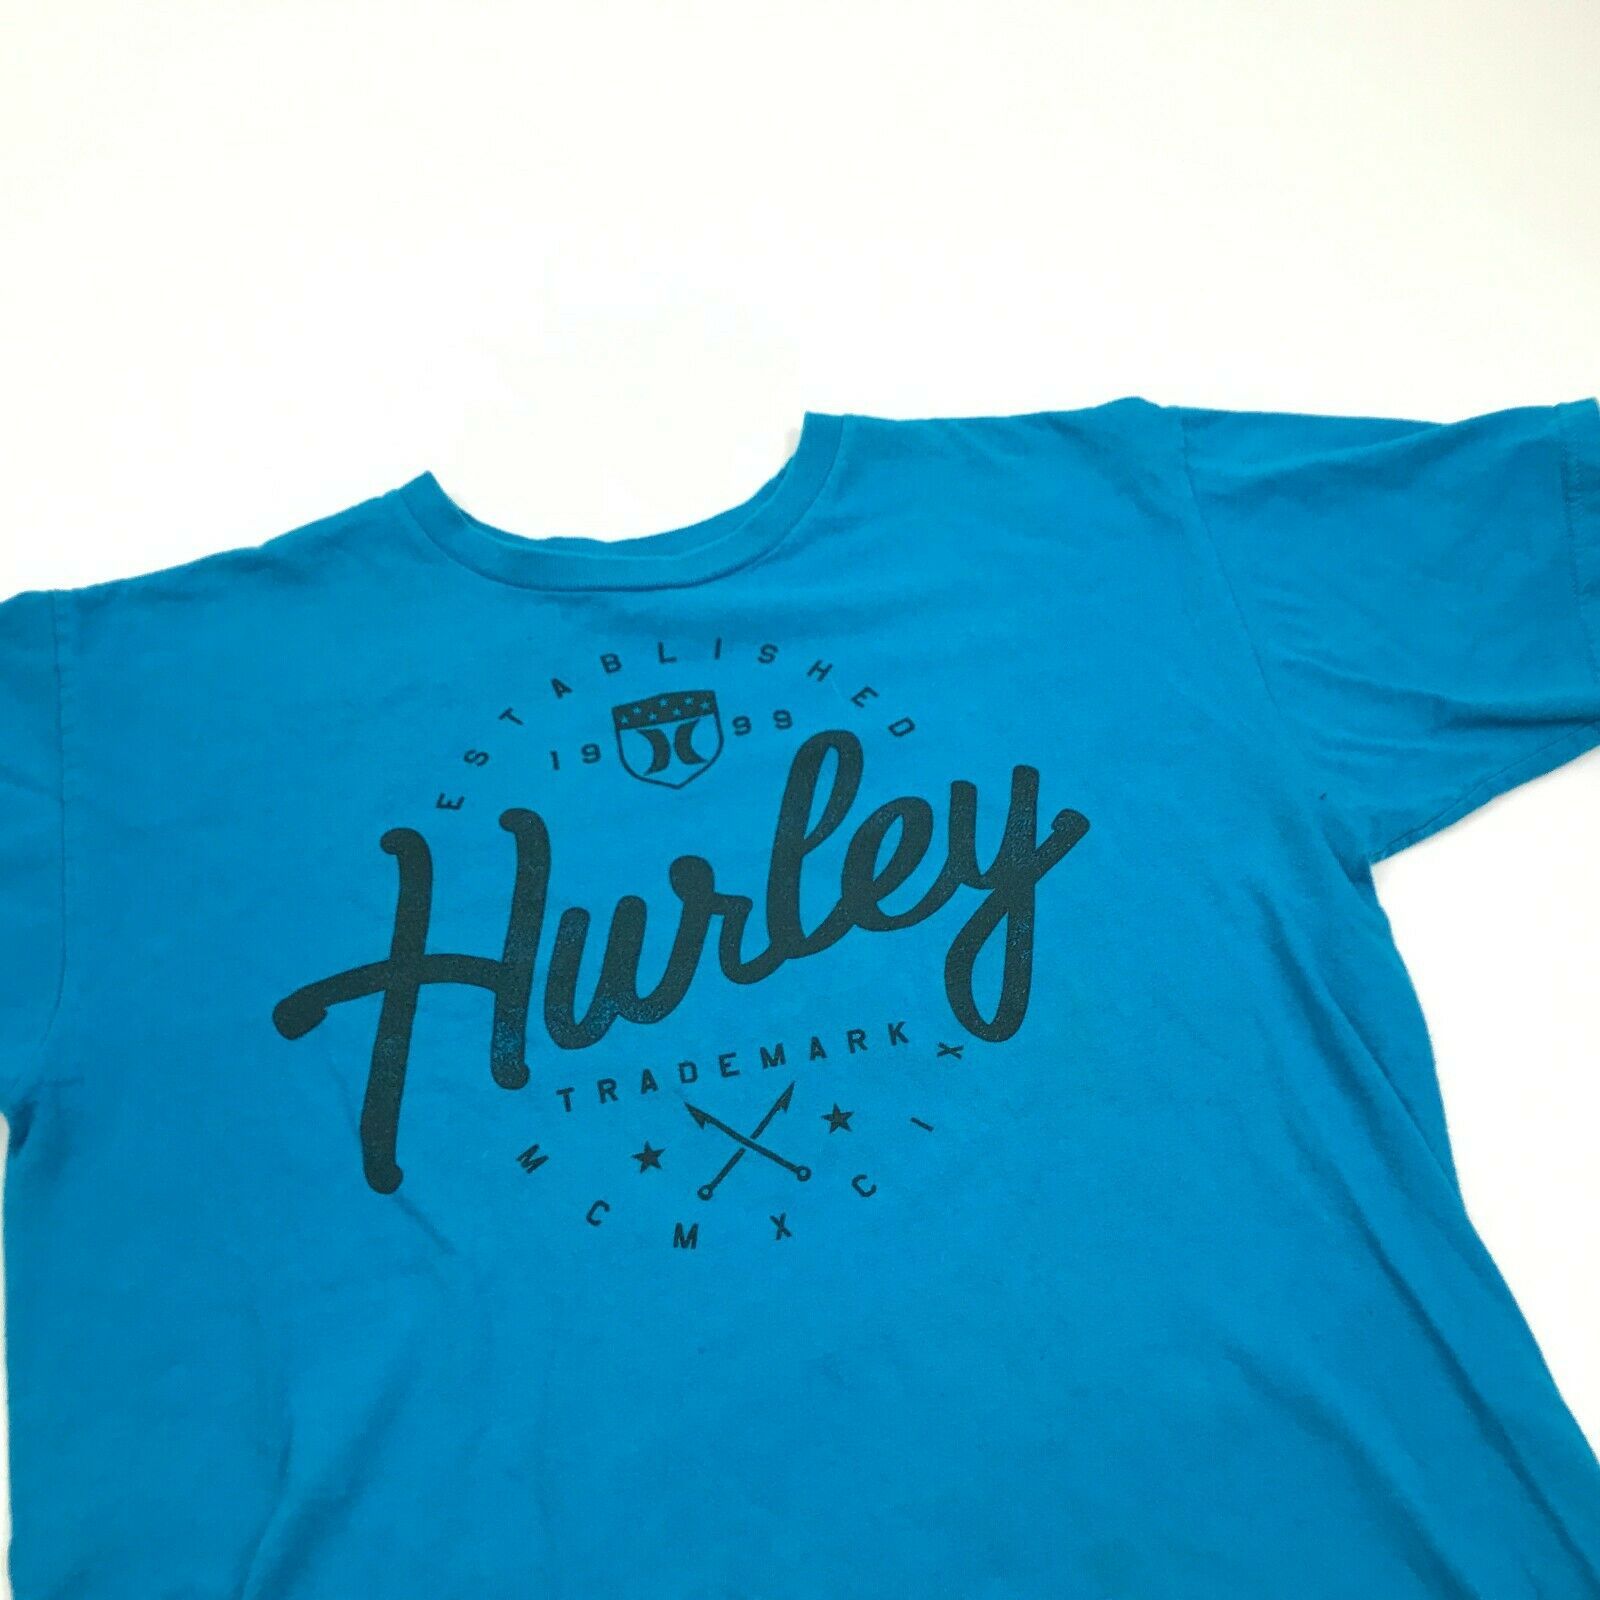 Hurley Trademark Shirt Men's Size M Medium Blue Classic Fit Script ...